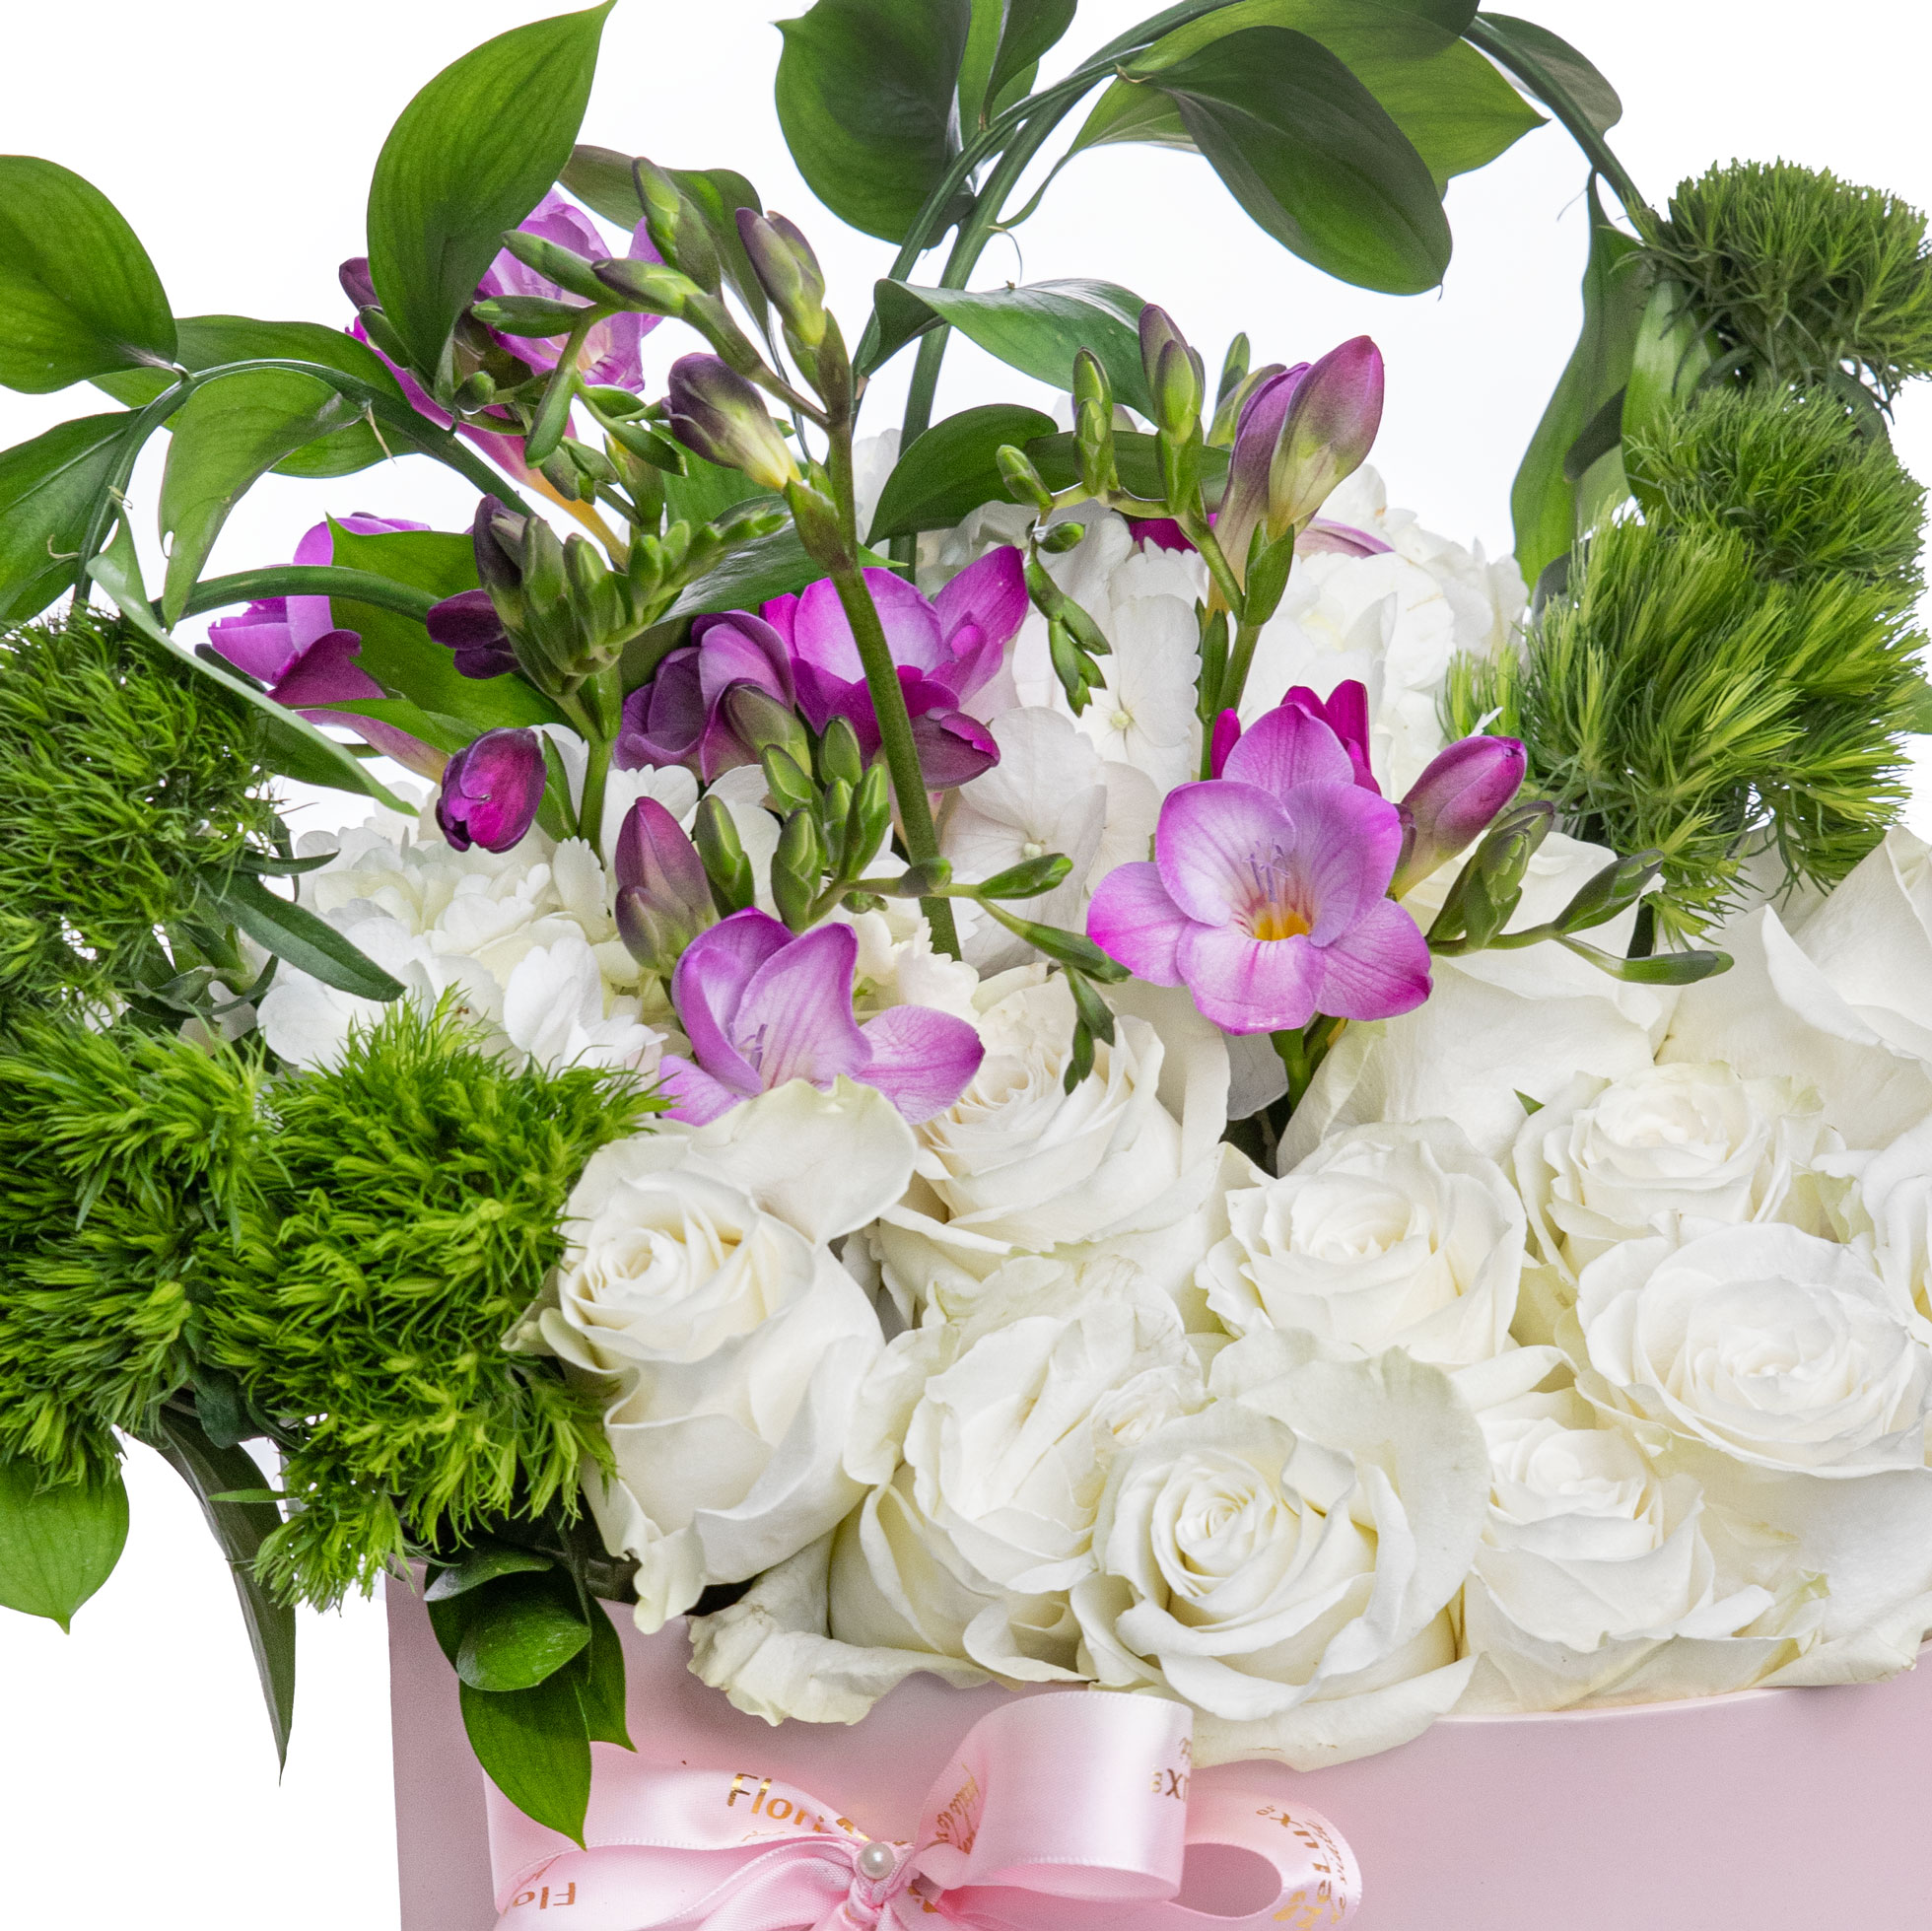 Aranjament floral cutie cu trandafiri, frezii, hortensii si garoafe verzi